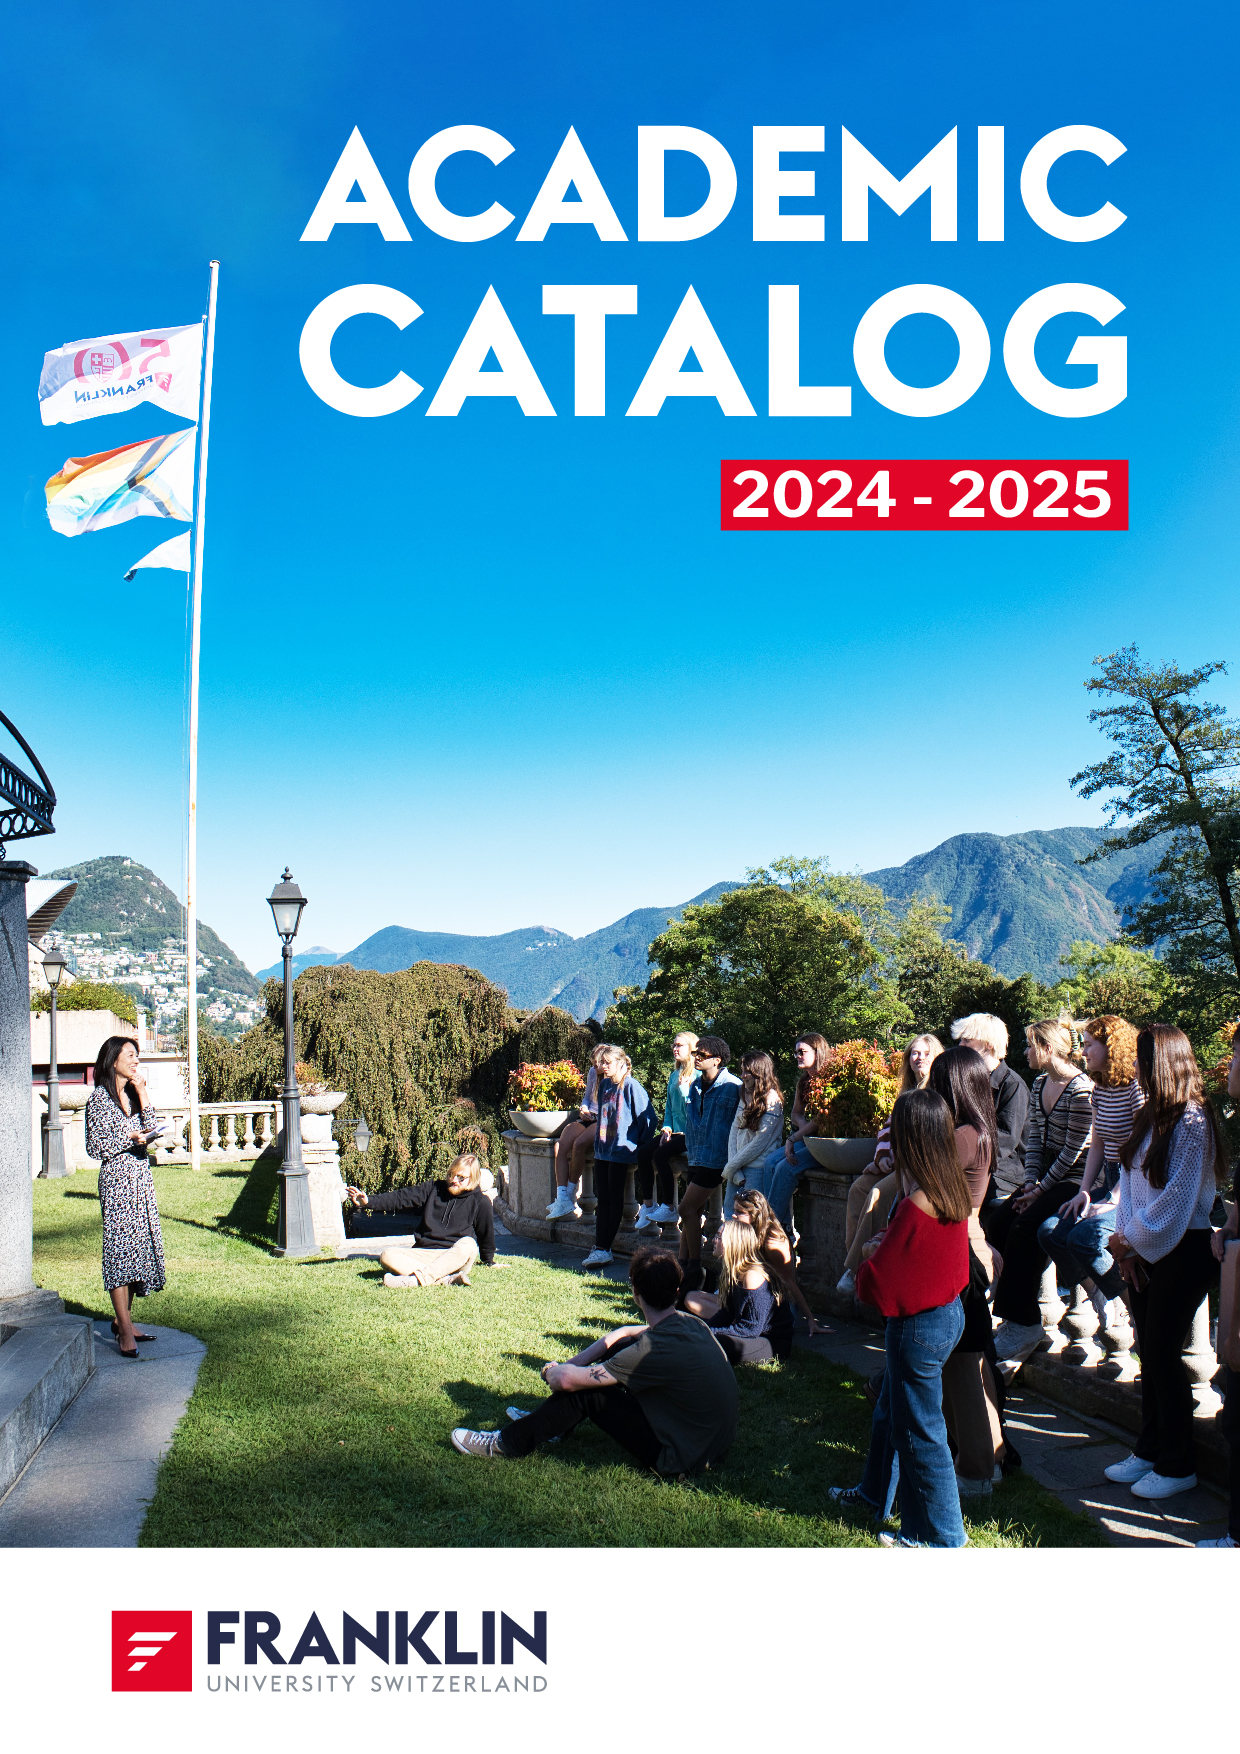 ACADEMIC CATALOG 2024-2025